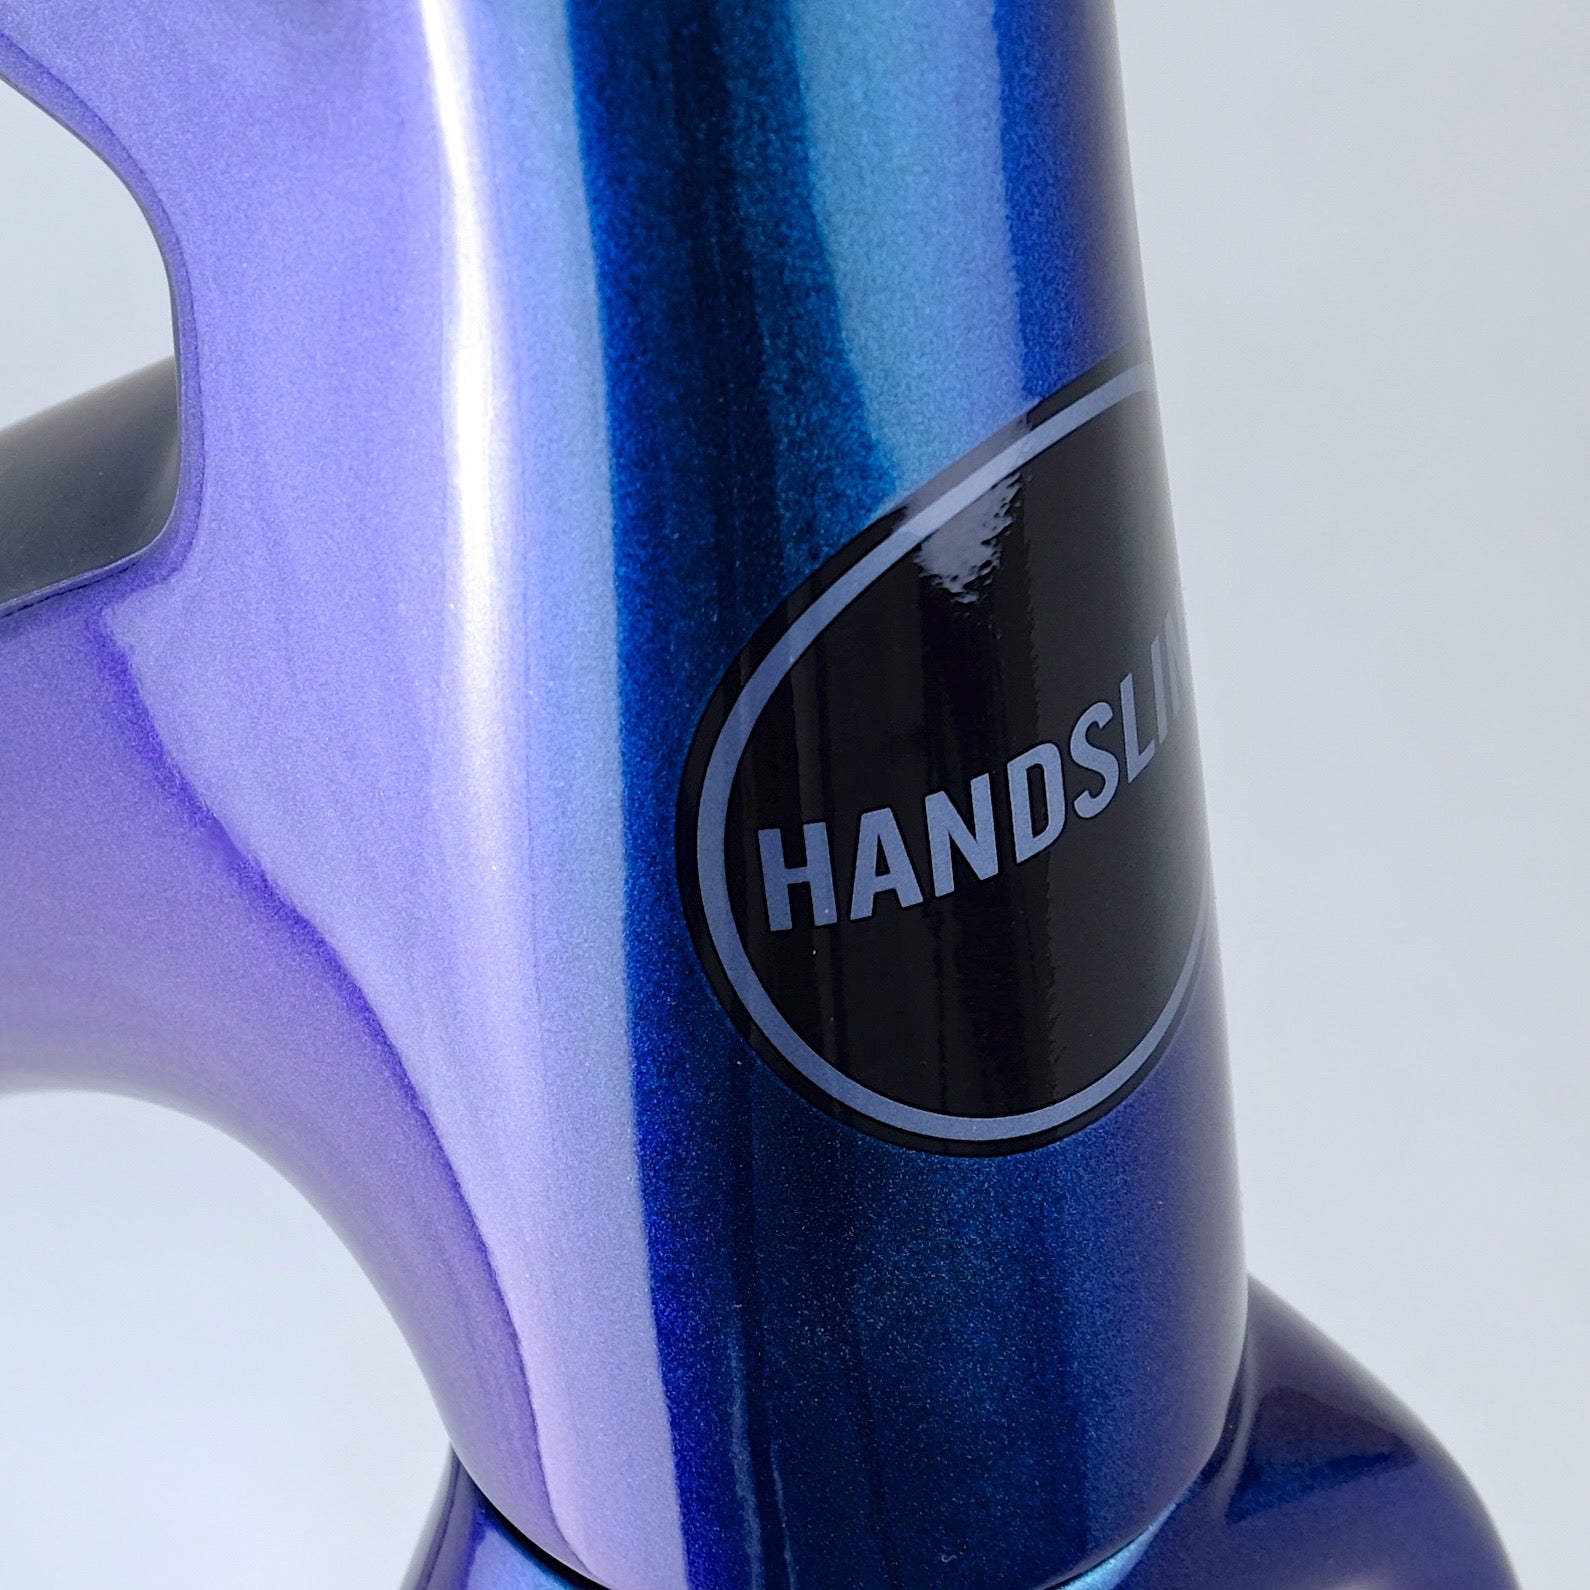 Handsling A1R0evo frame - Blueberry